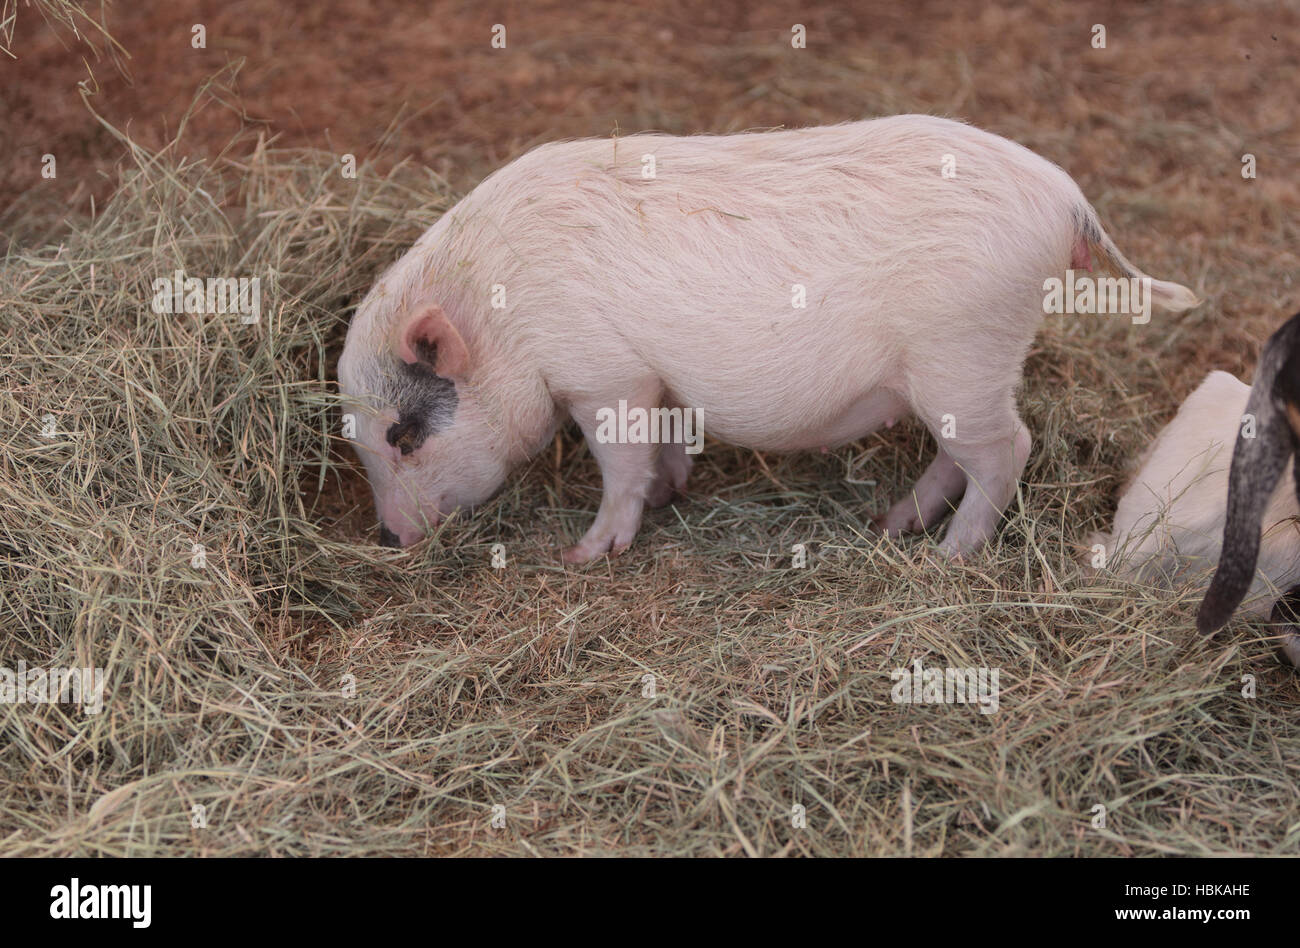 Pink pig known as a Gottingen minipig Stock Photo